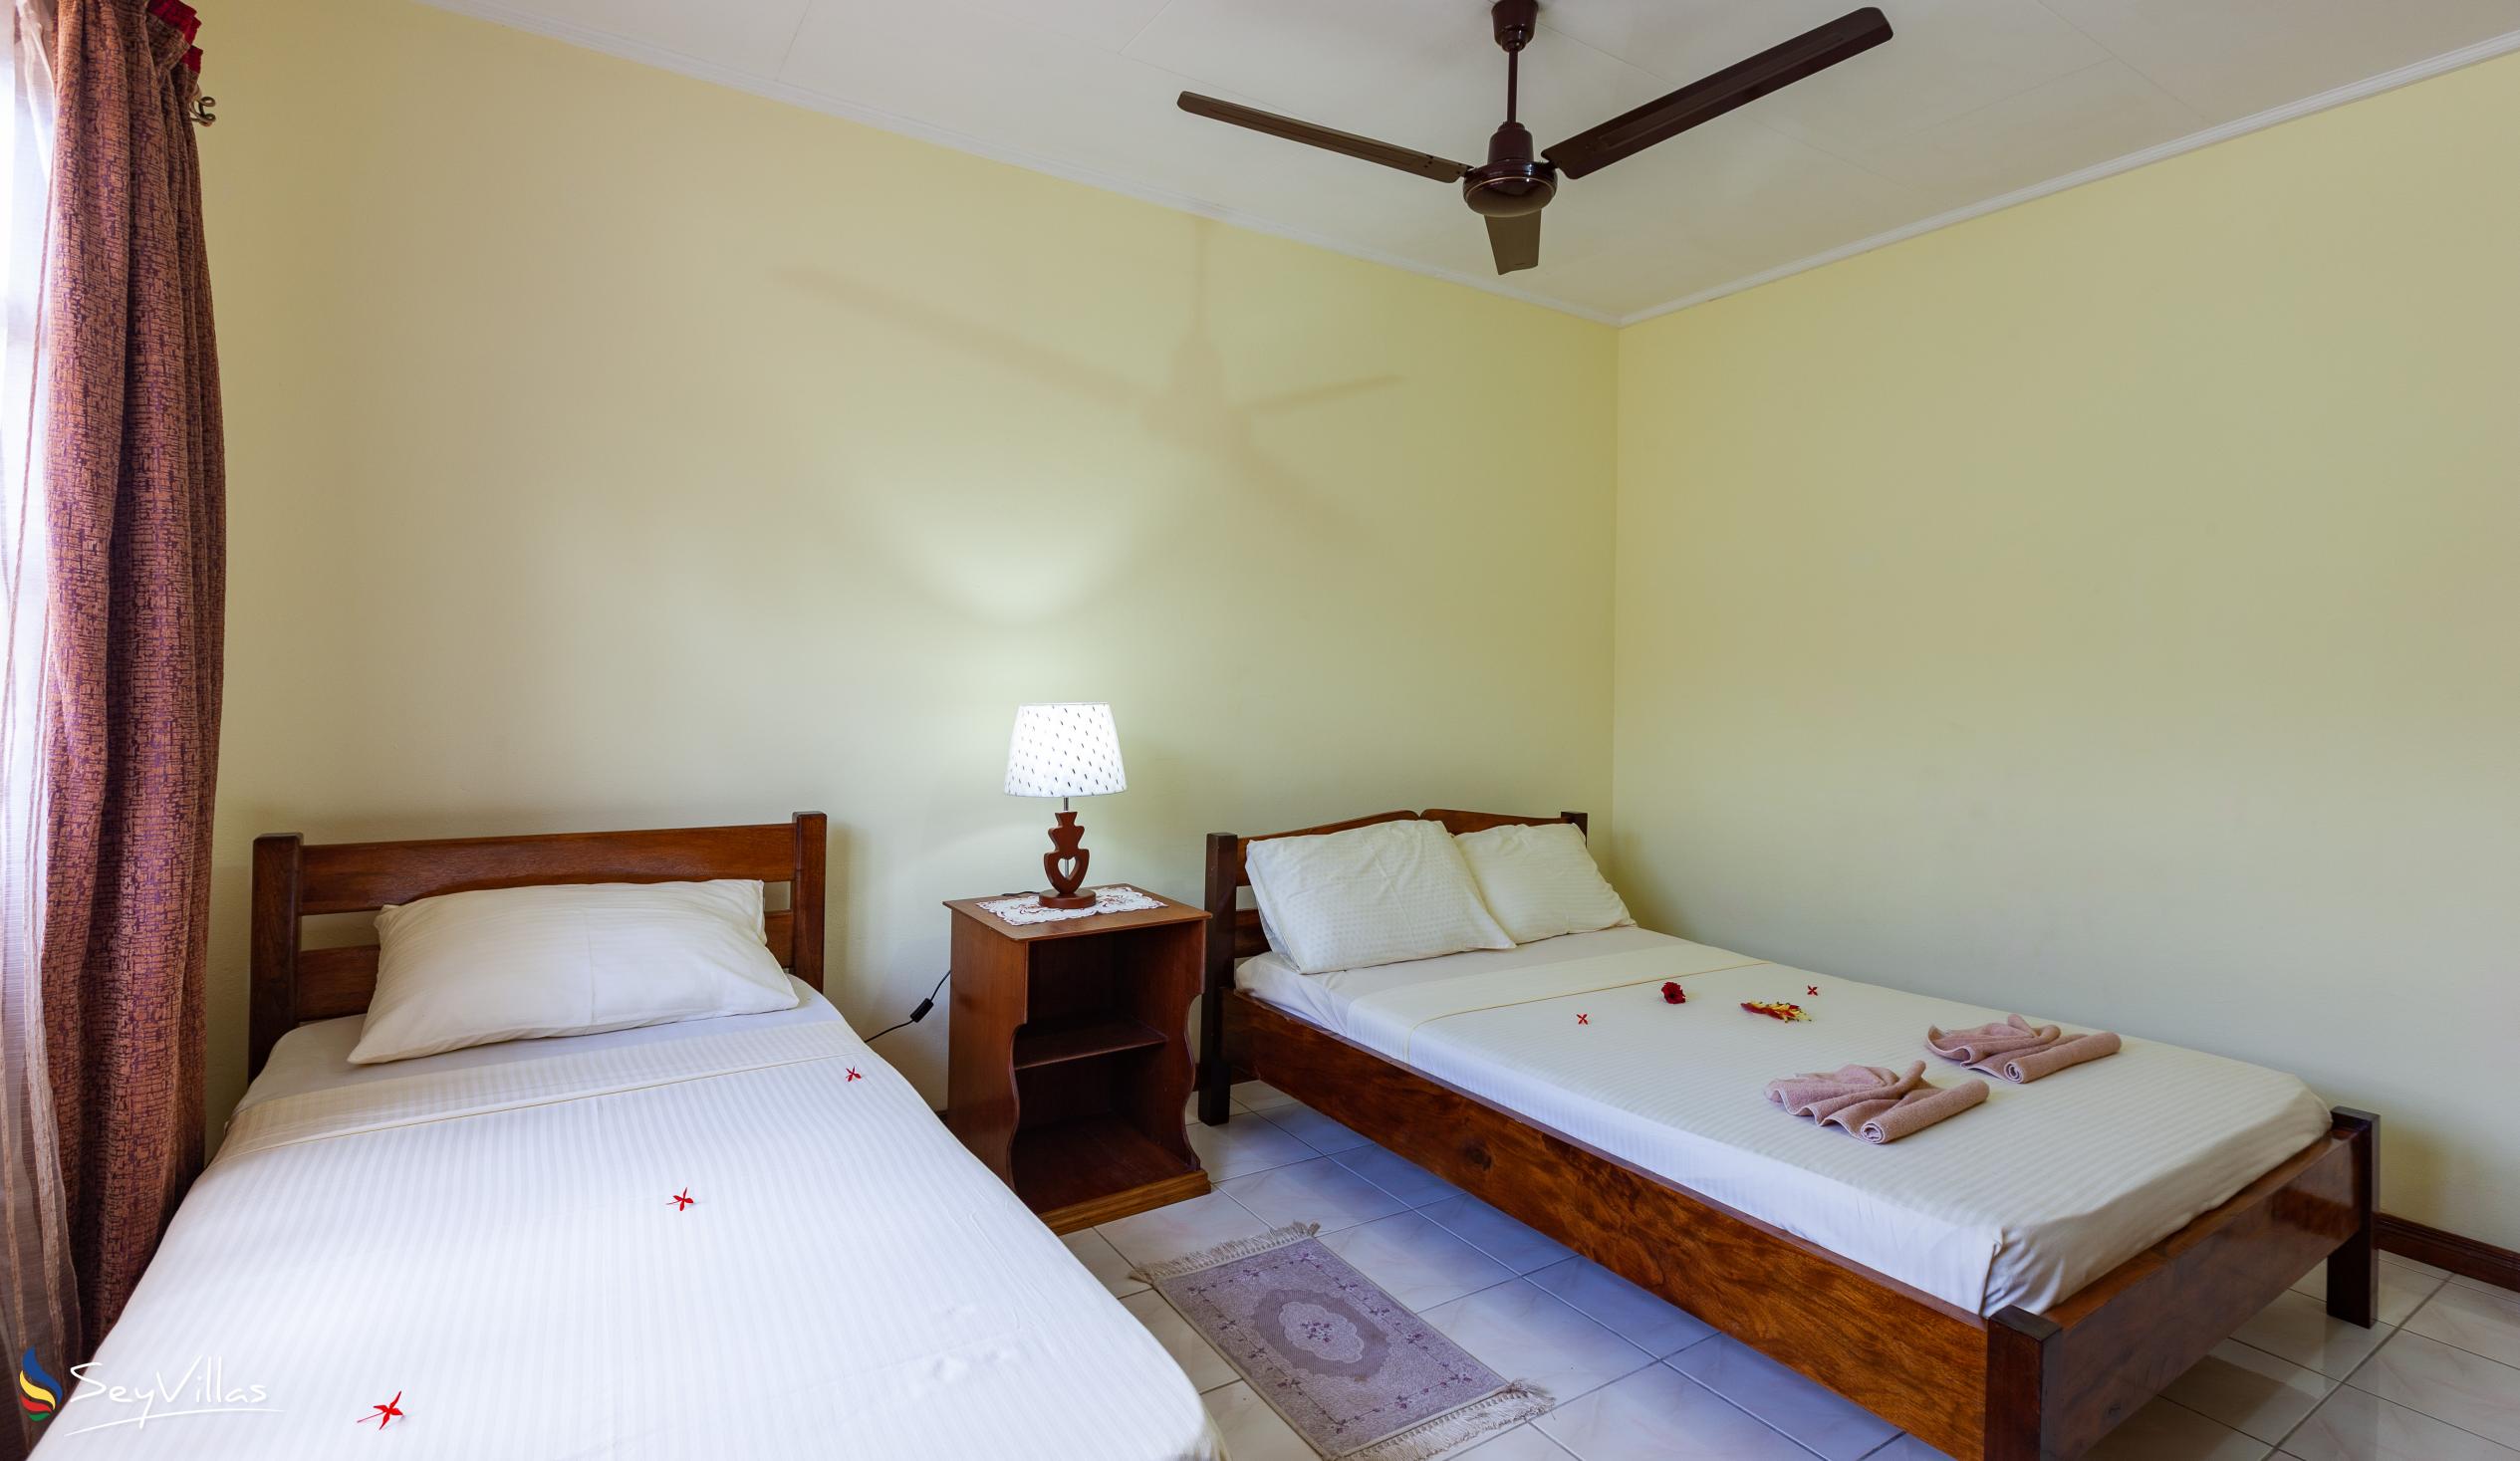 Photo 53: Villa Bananier - Double Room Villa Annex - Praslin (Seychelles)